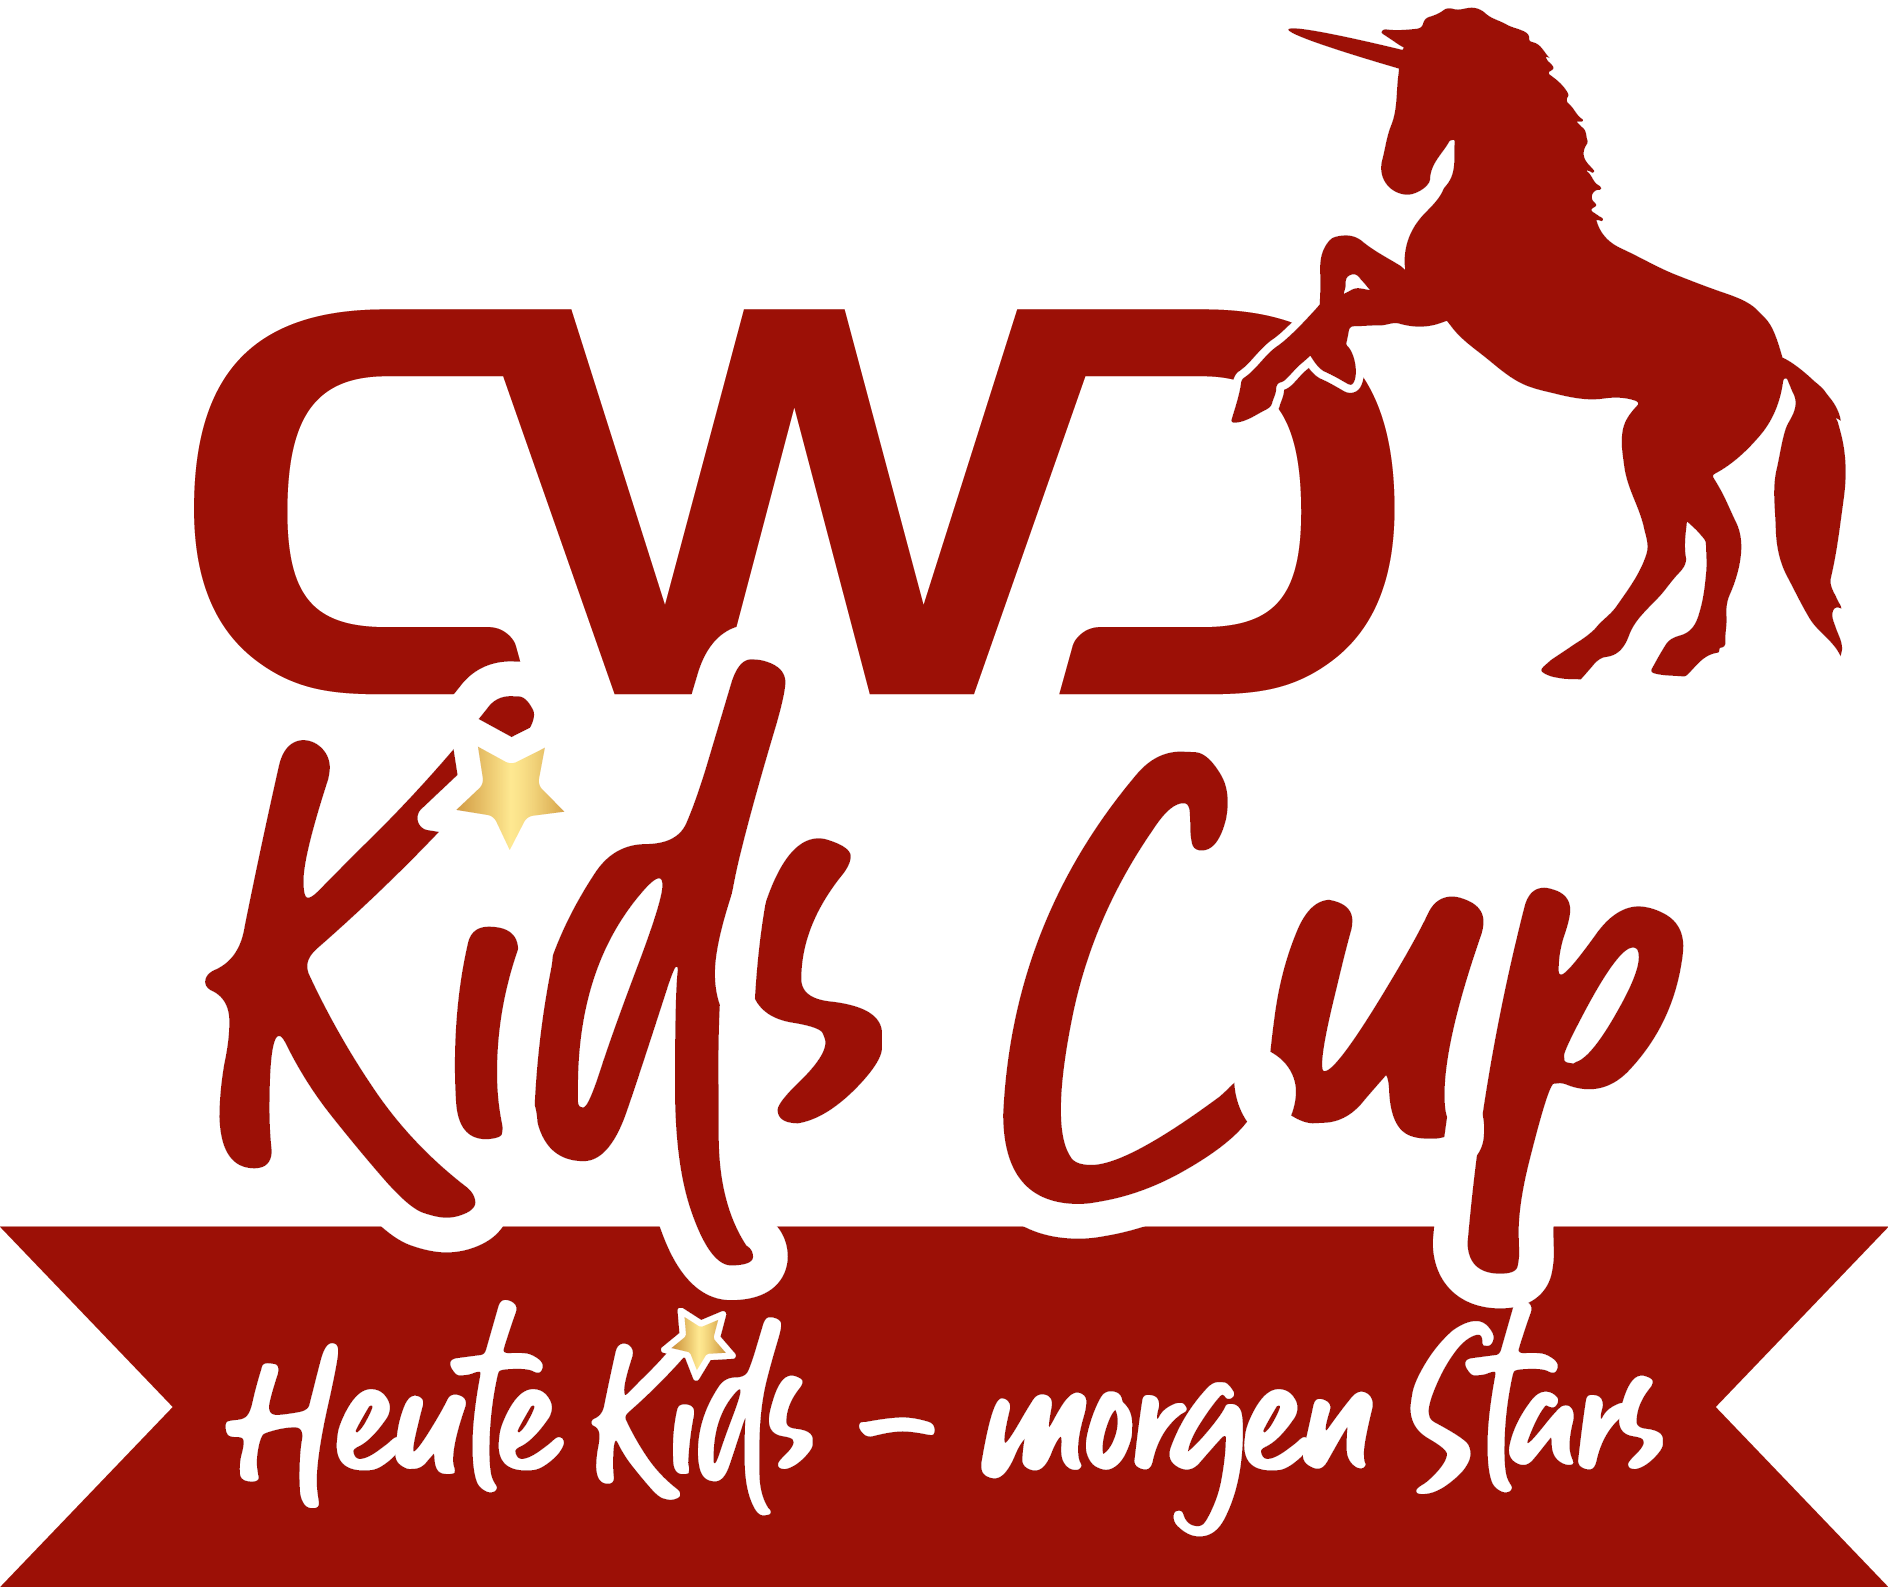 CWD Kids Cup